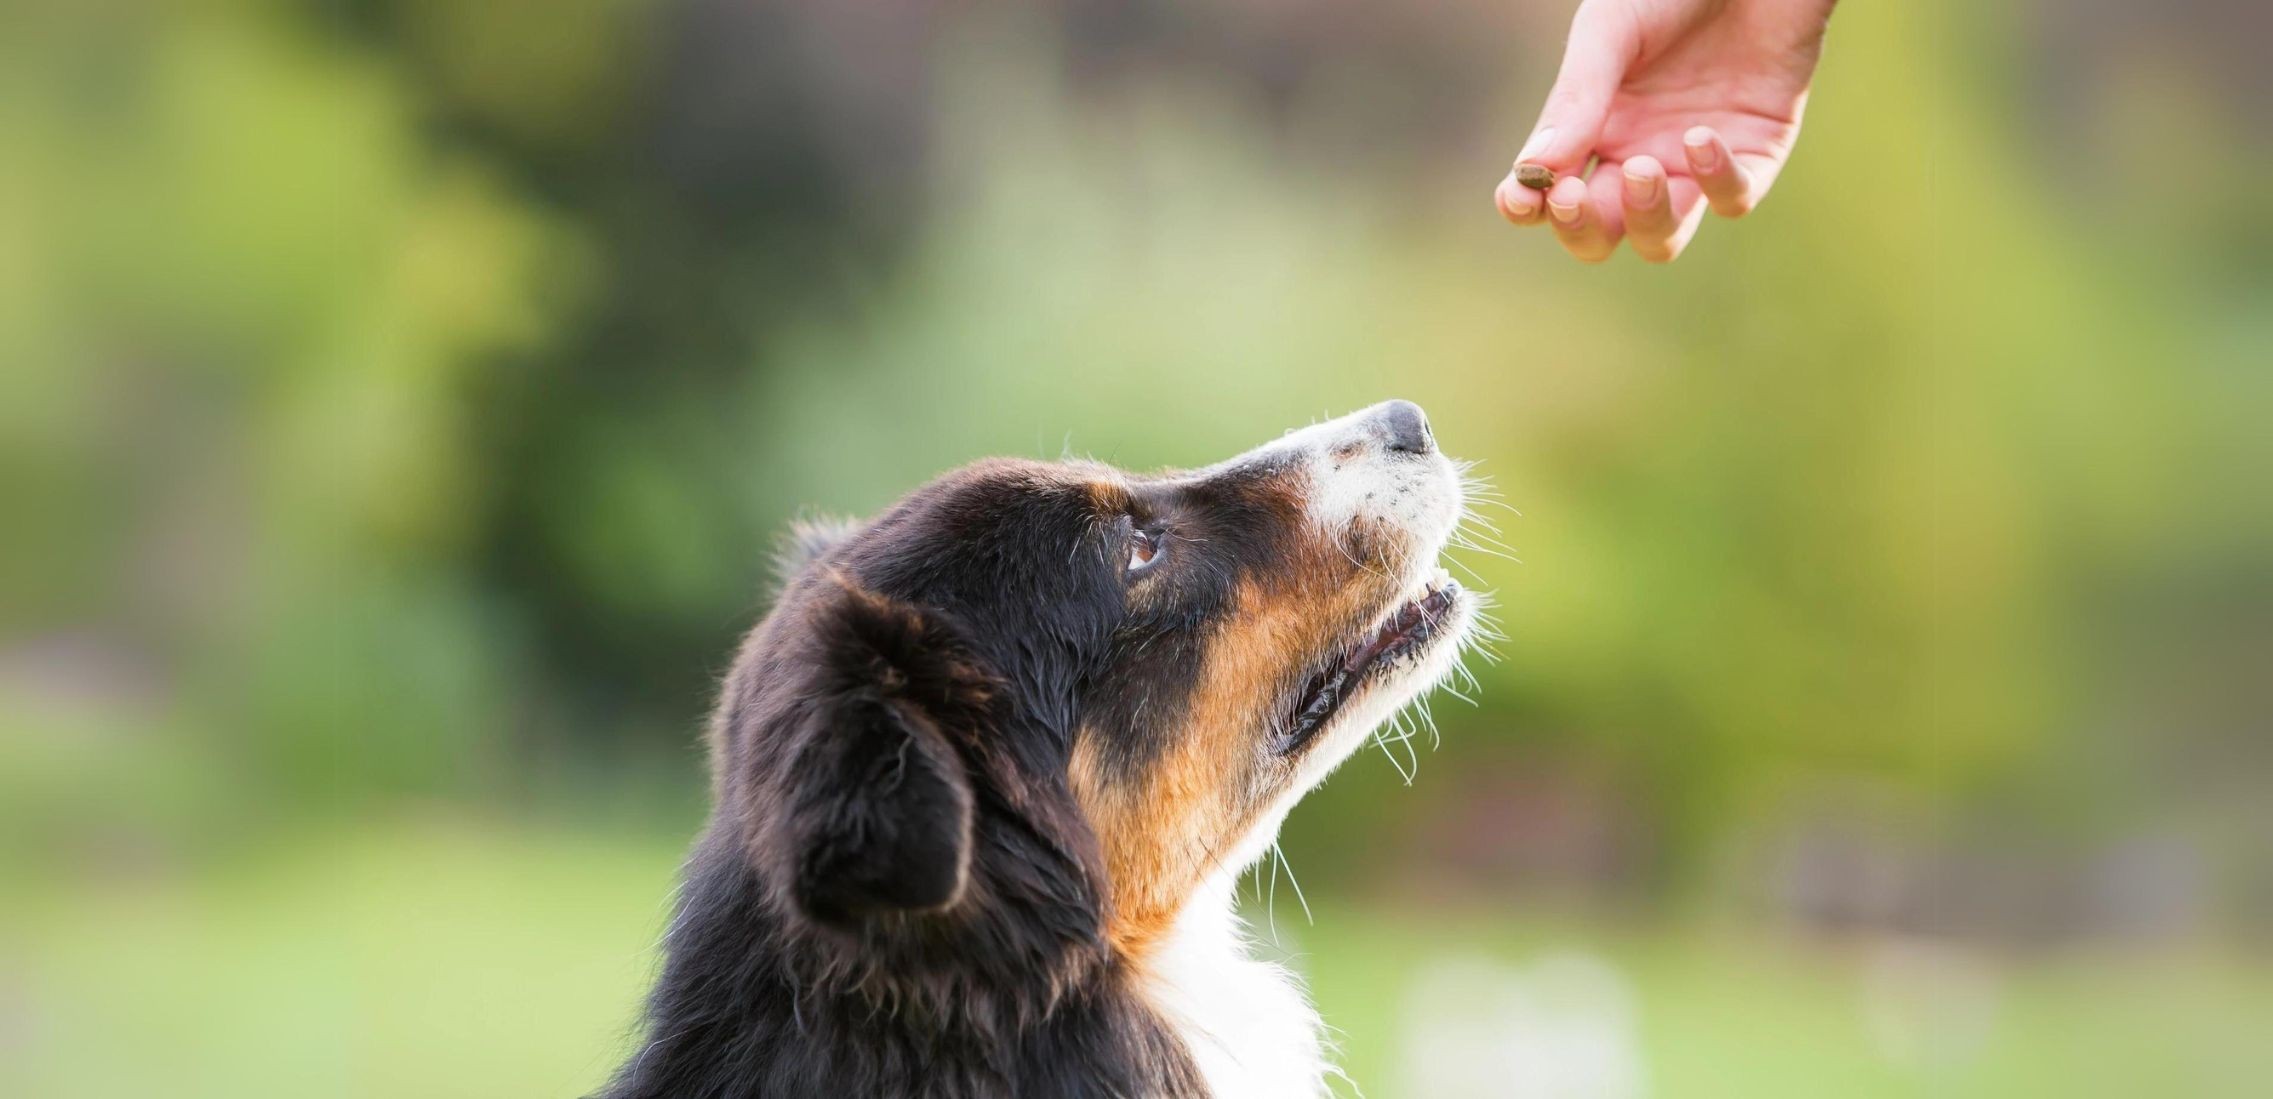 Dog reaching to receive treat